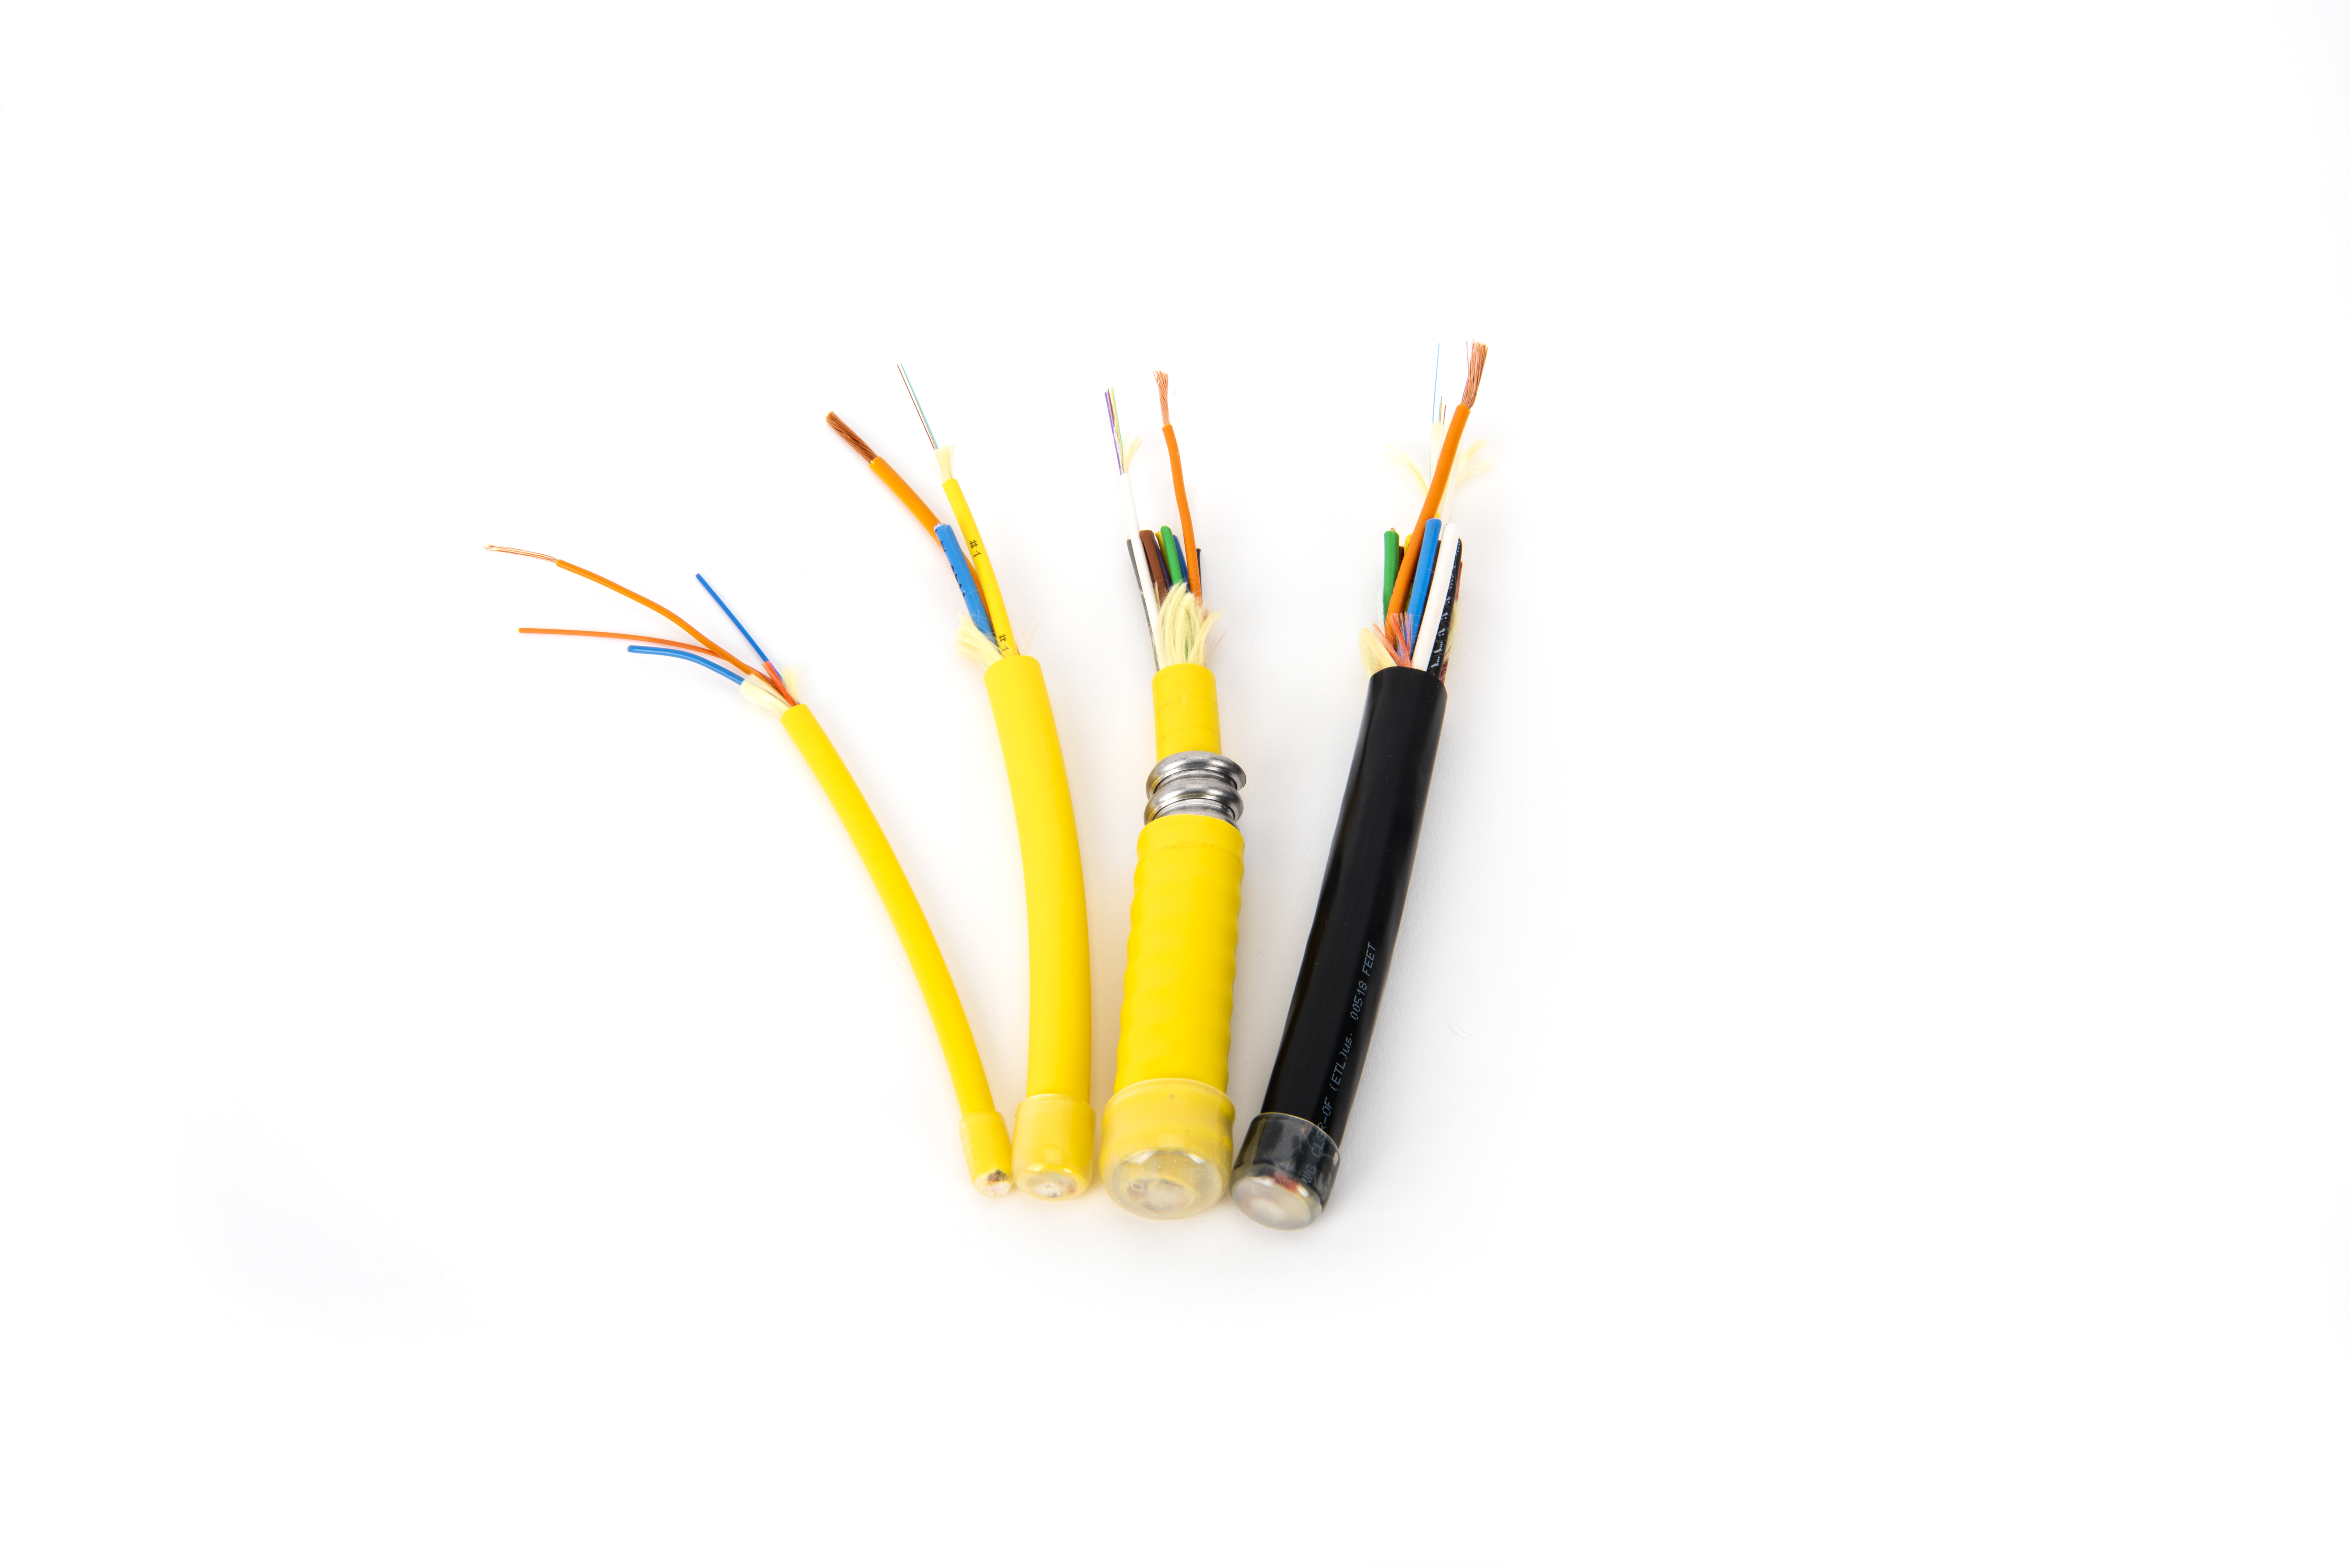 Anixter 2 Meter Fiber Optics Cable Assembly PN 139055 QE for sale